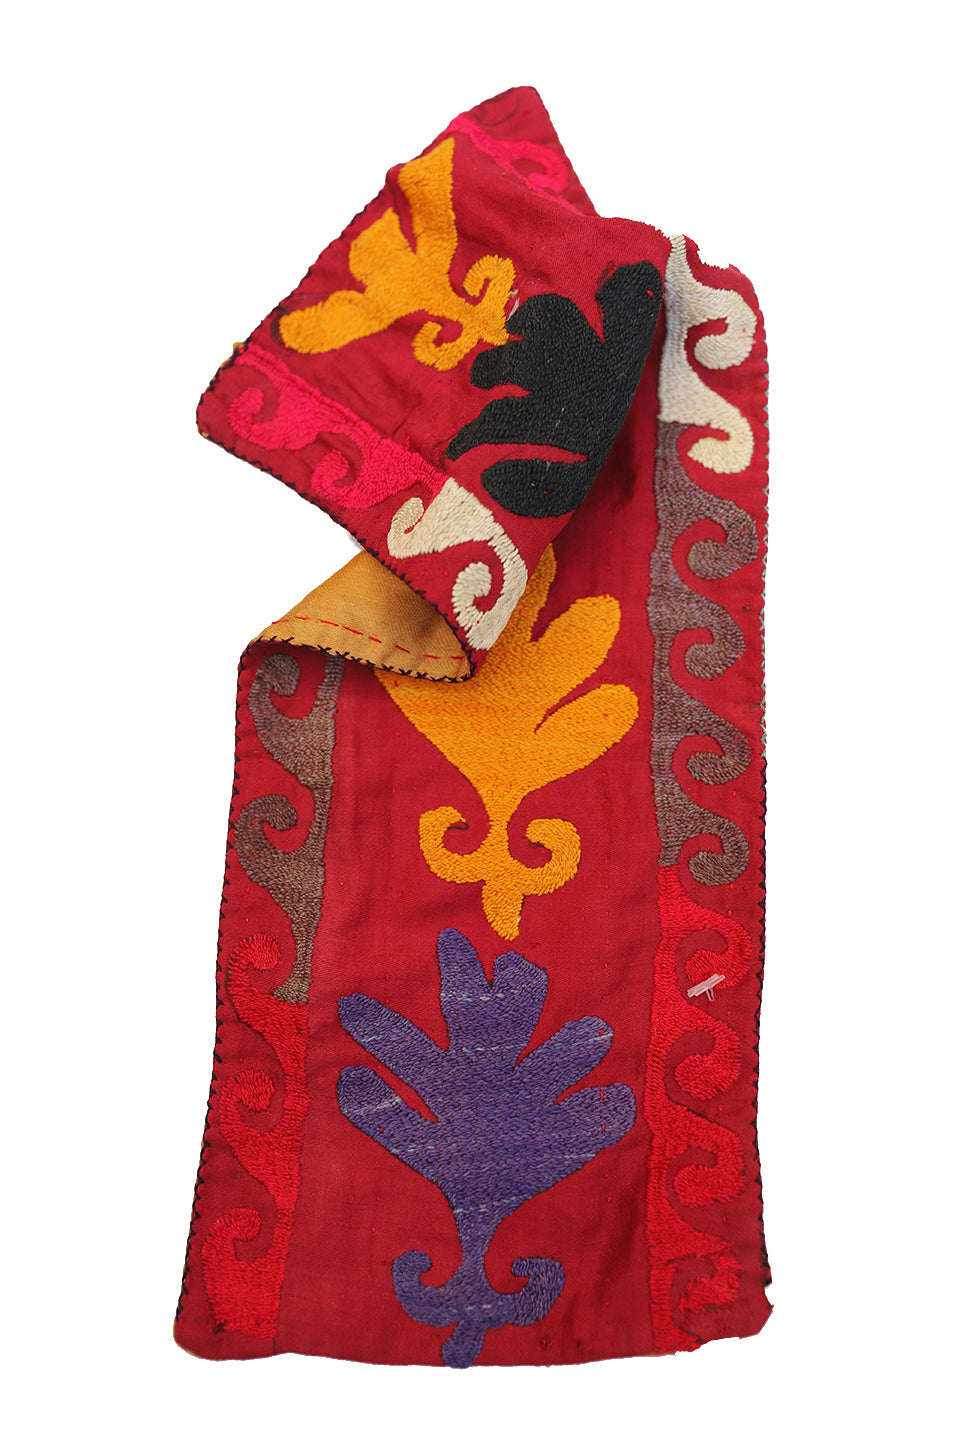 6"x16" Small decorative Uzbek Suzani Embroidery Textile